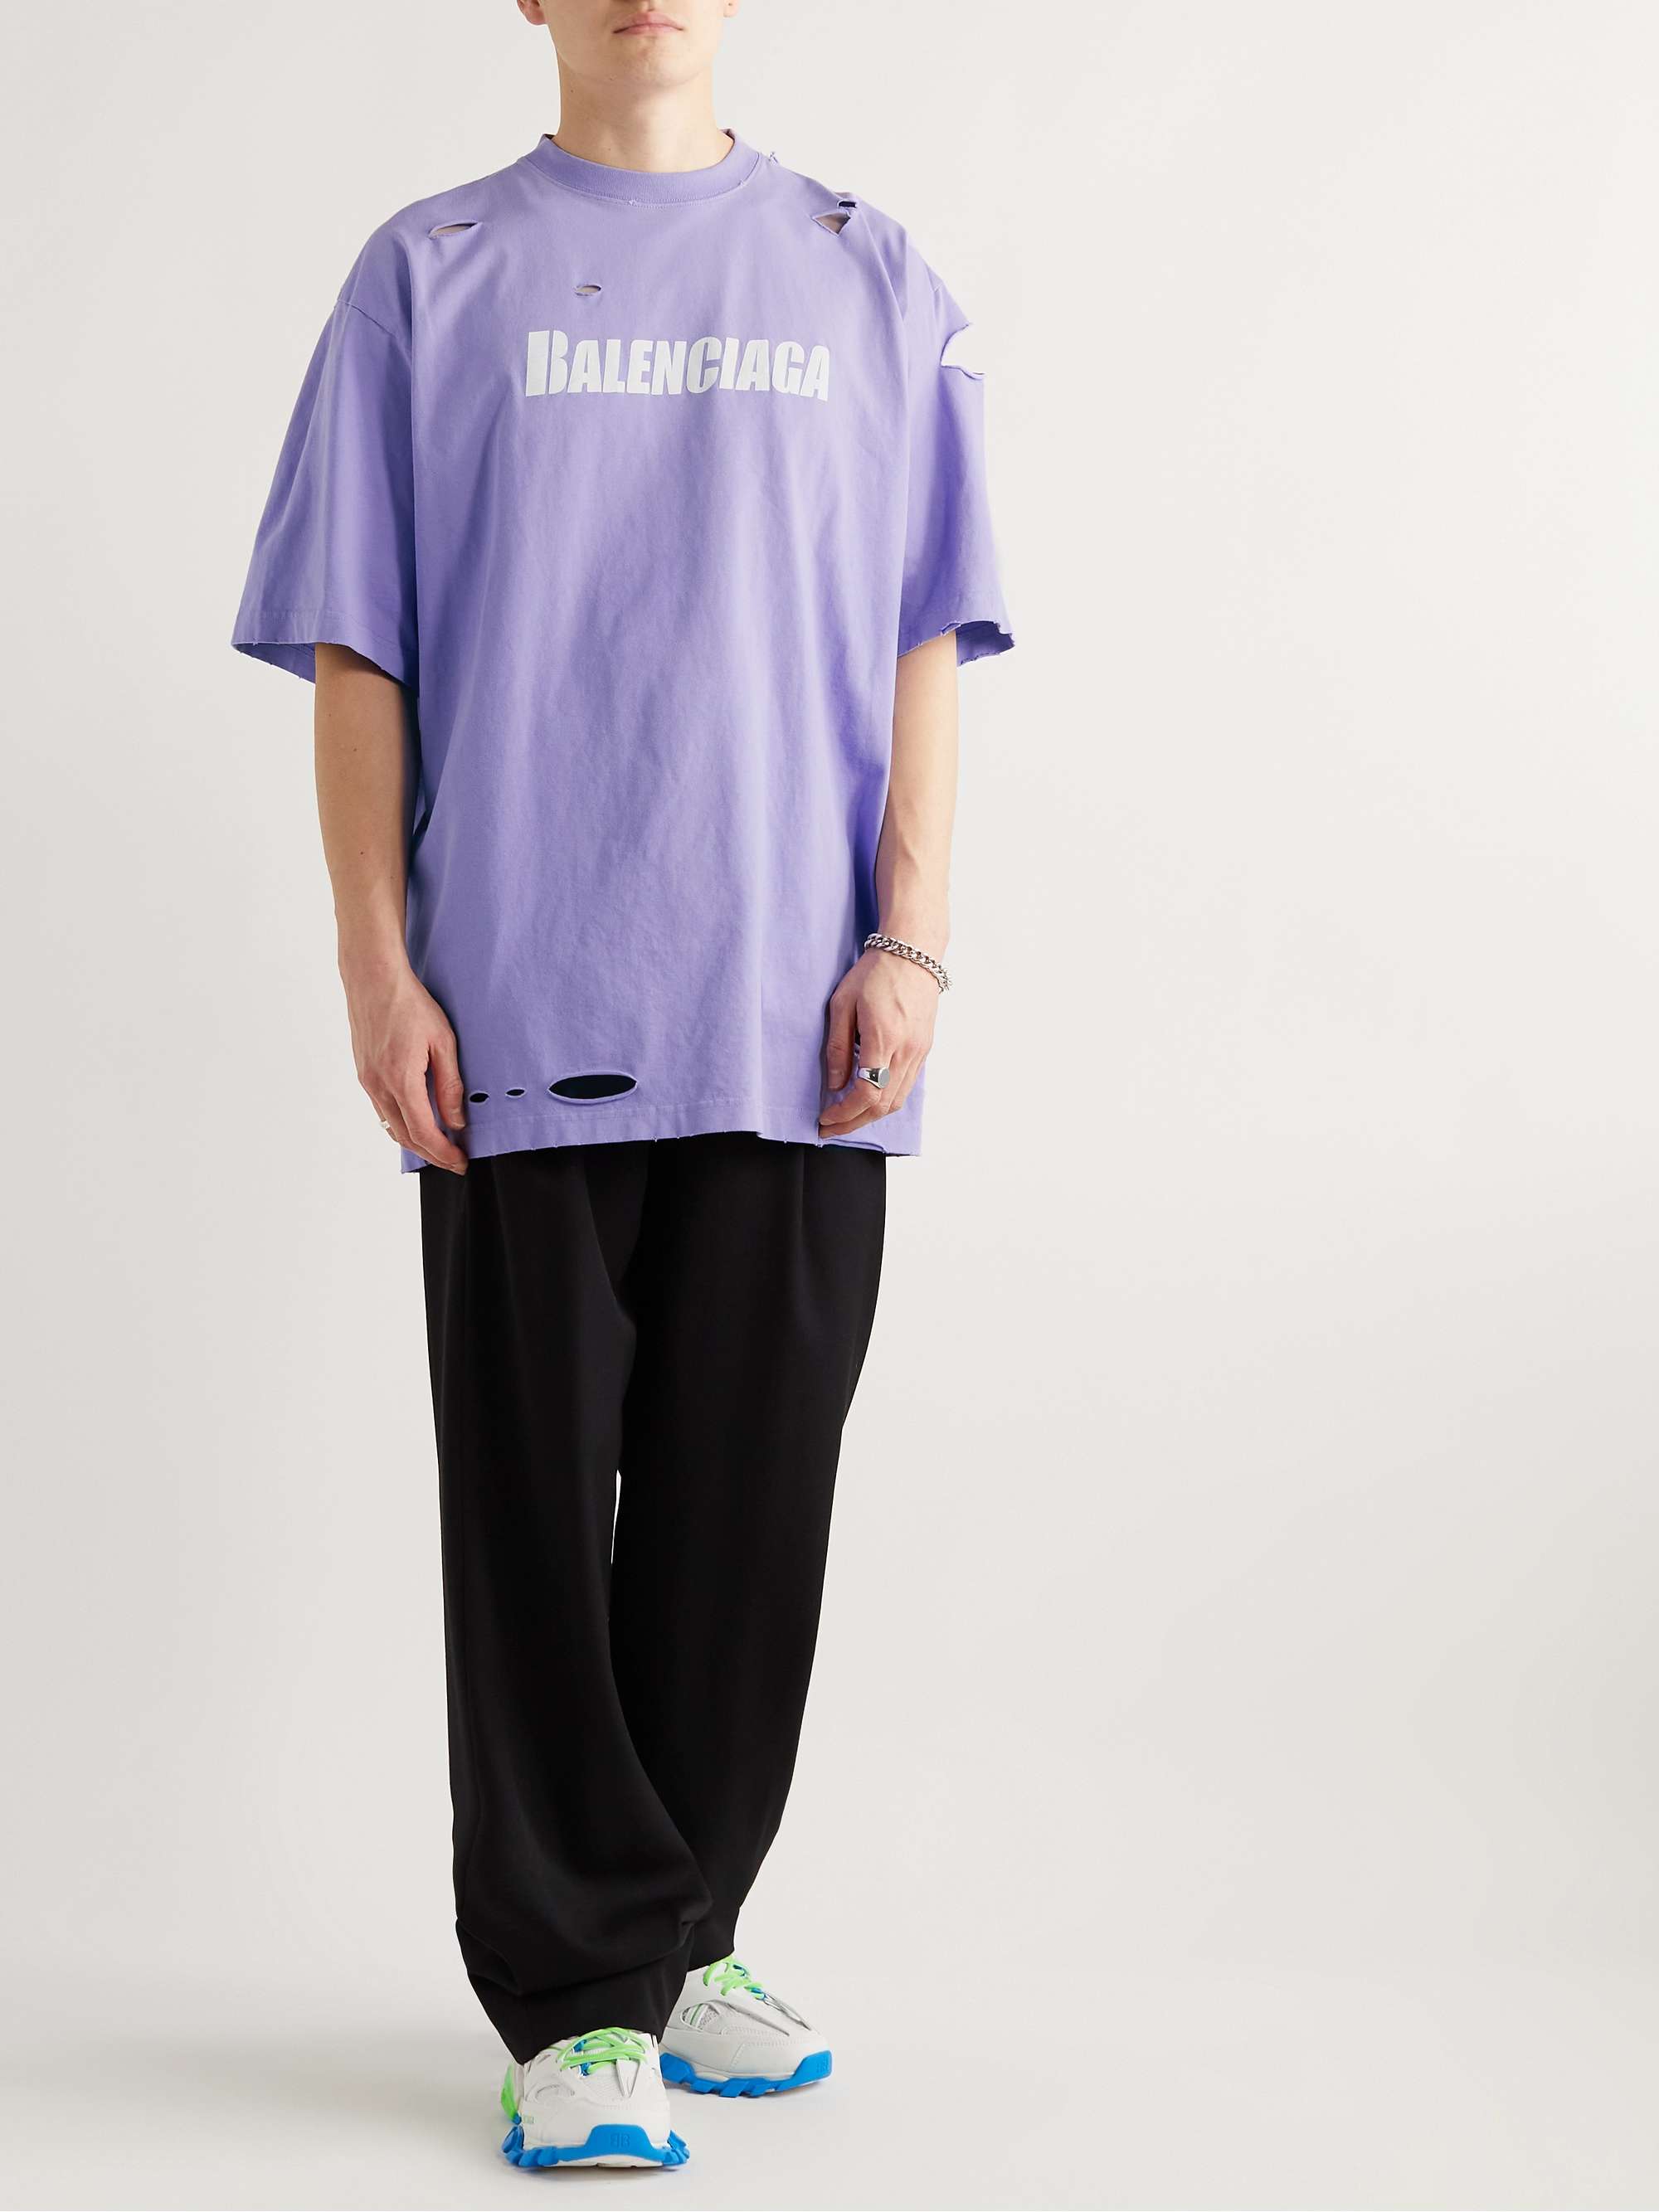 BALENCIAGA Oversized Distressed Logo-Print T-Shirt for Men | MR PORTER